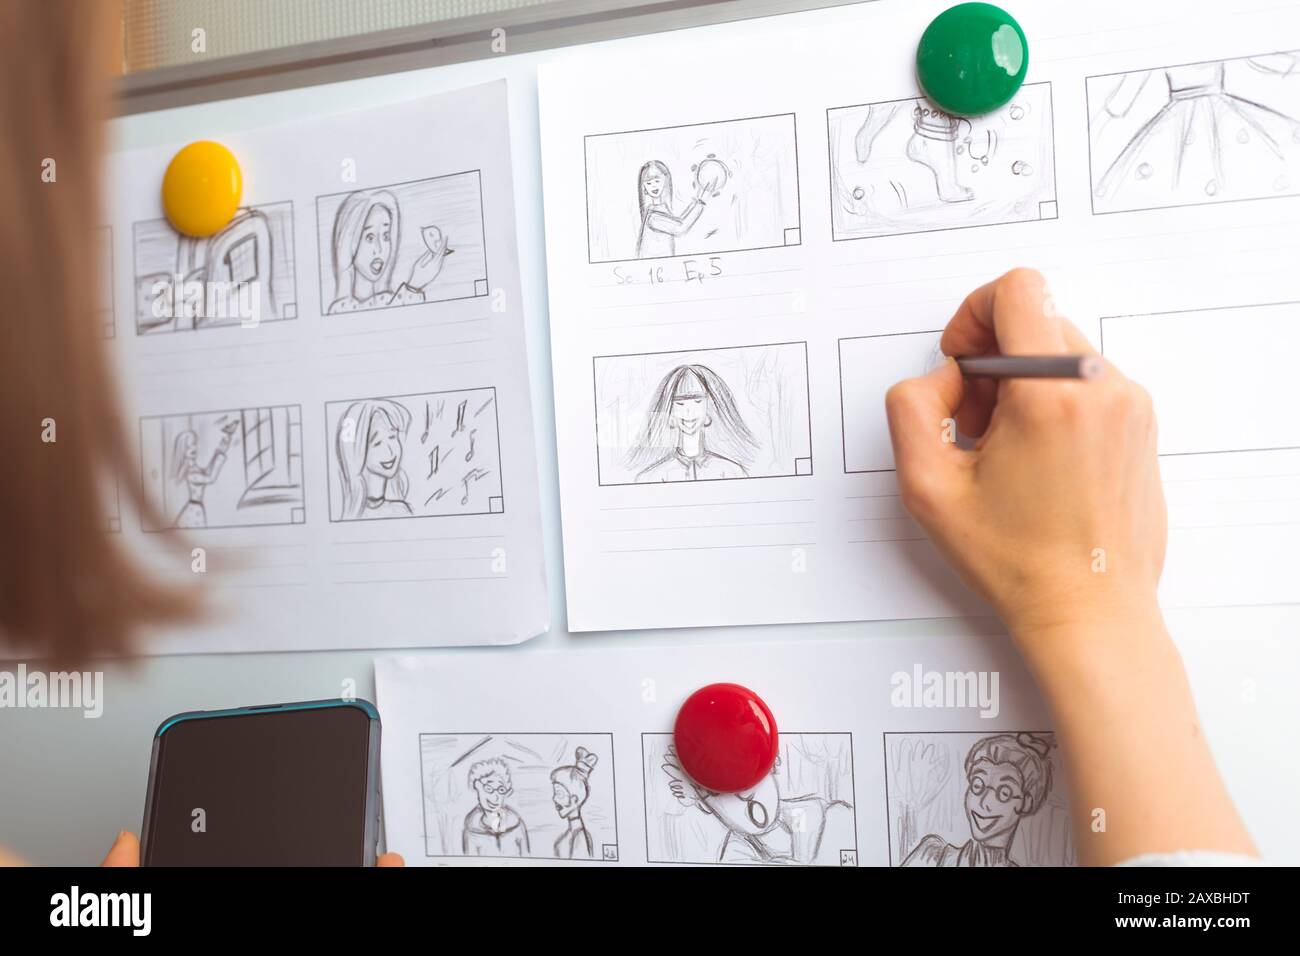 2,237 Storyboard Sketch Images, Stock Photos & Vectors | Shutterstock